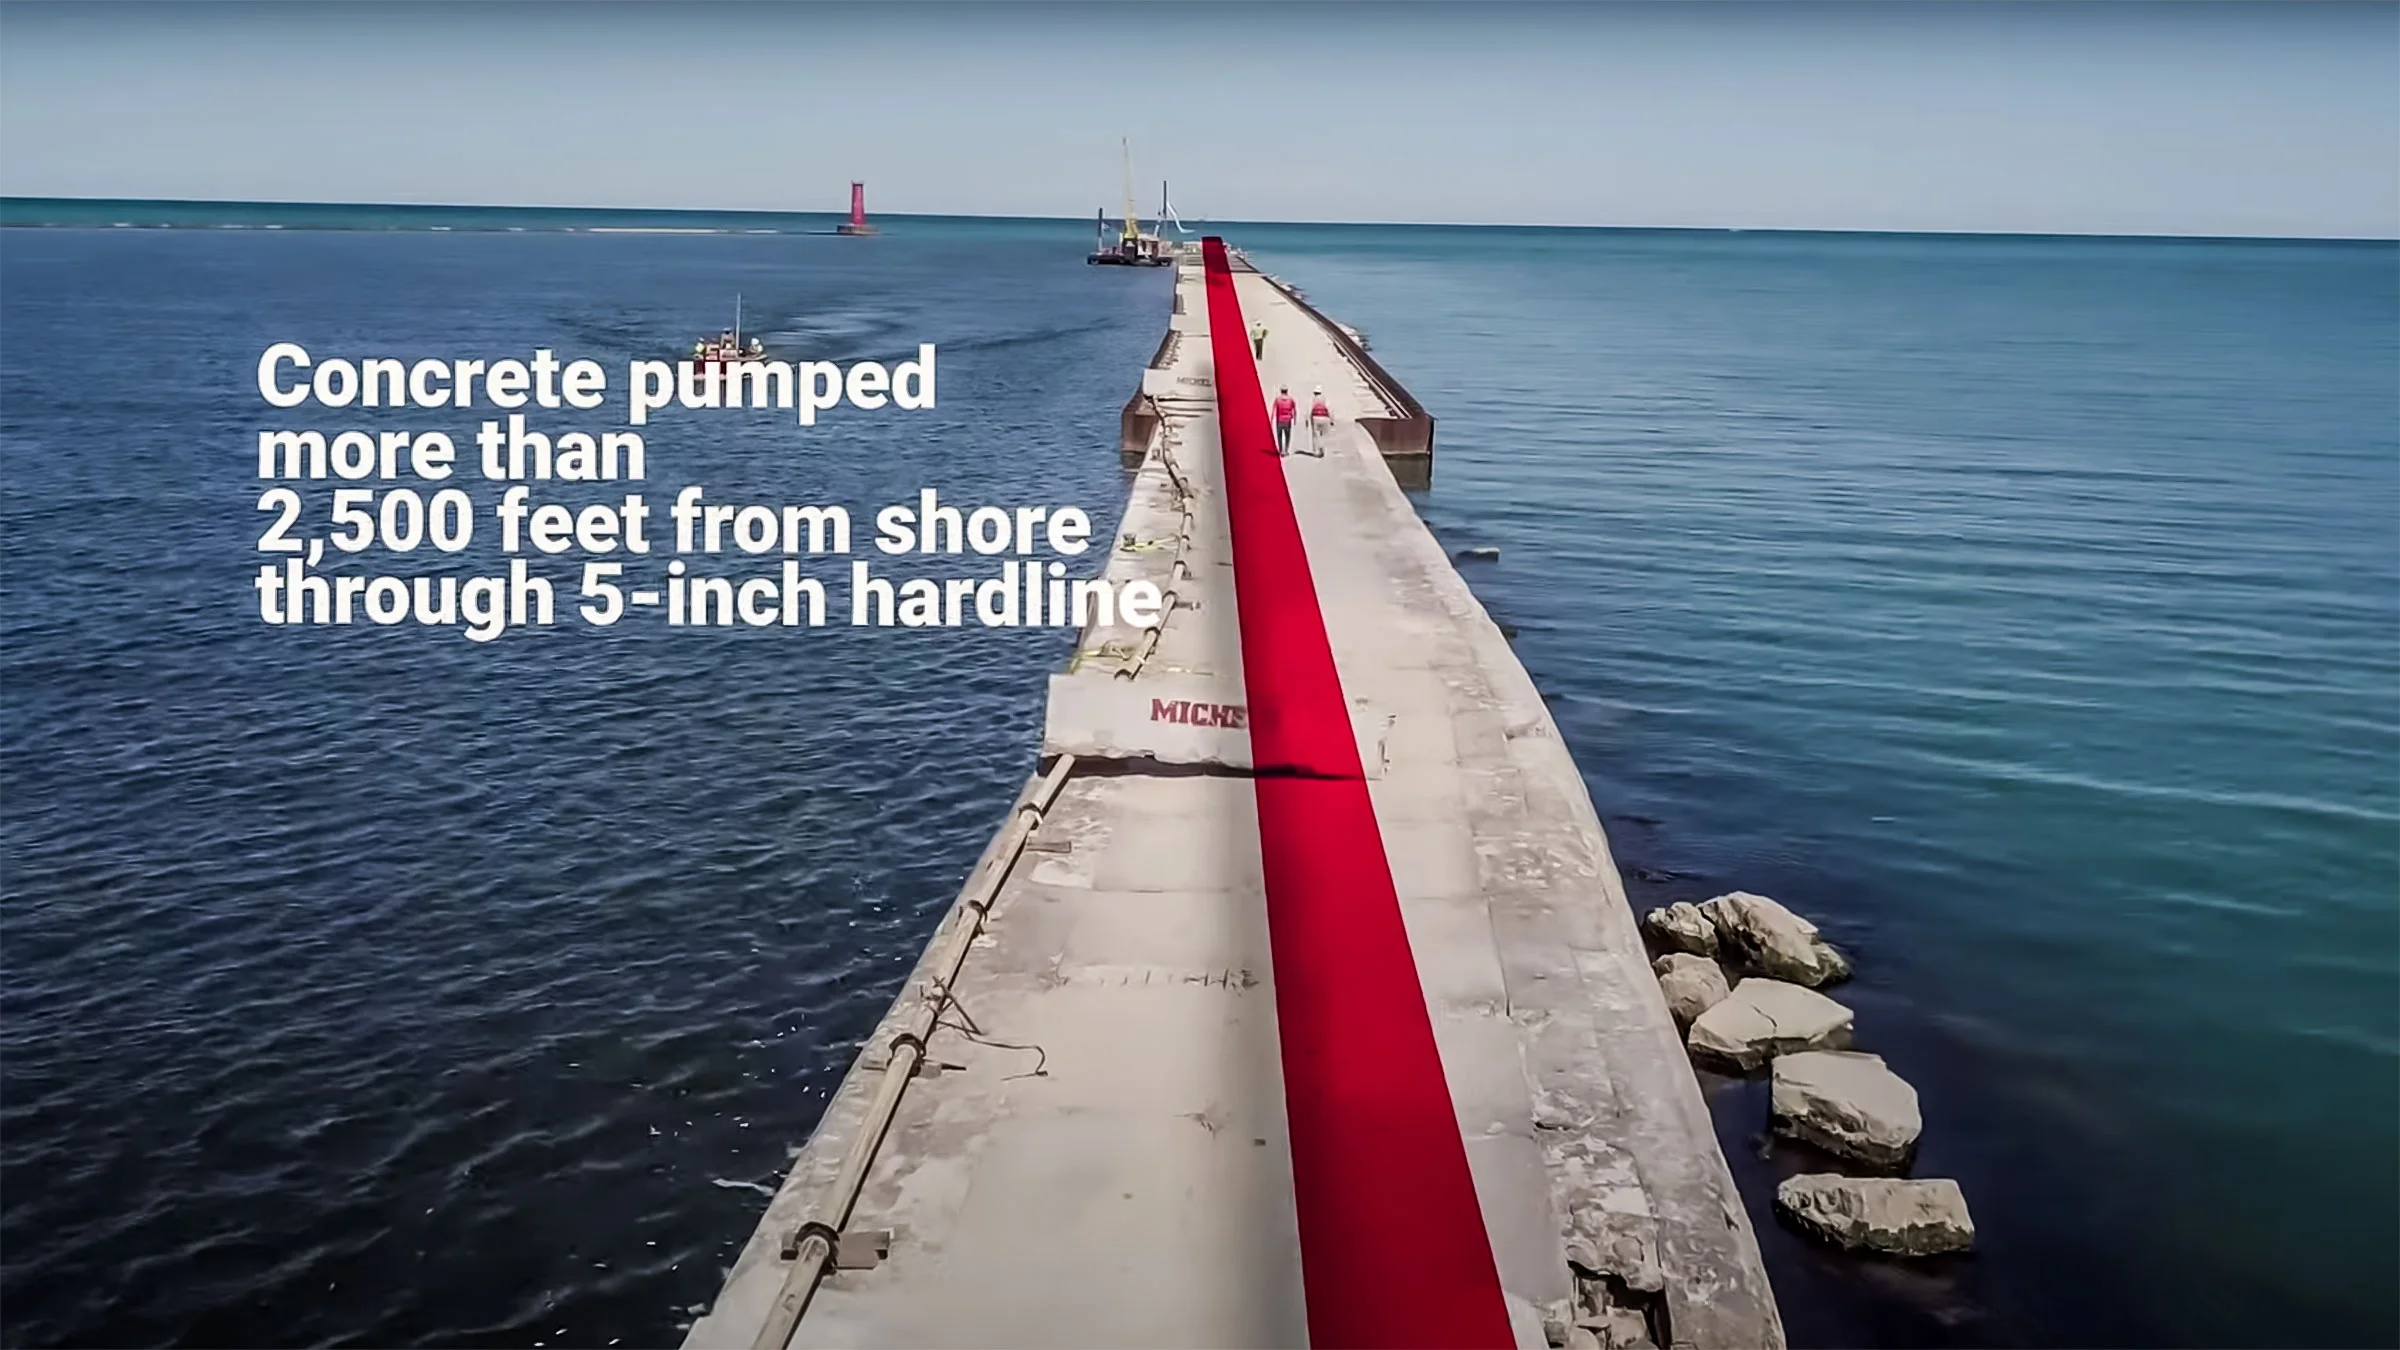 A long concrete pier extends into Lake Michigan